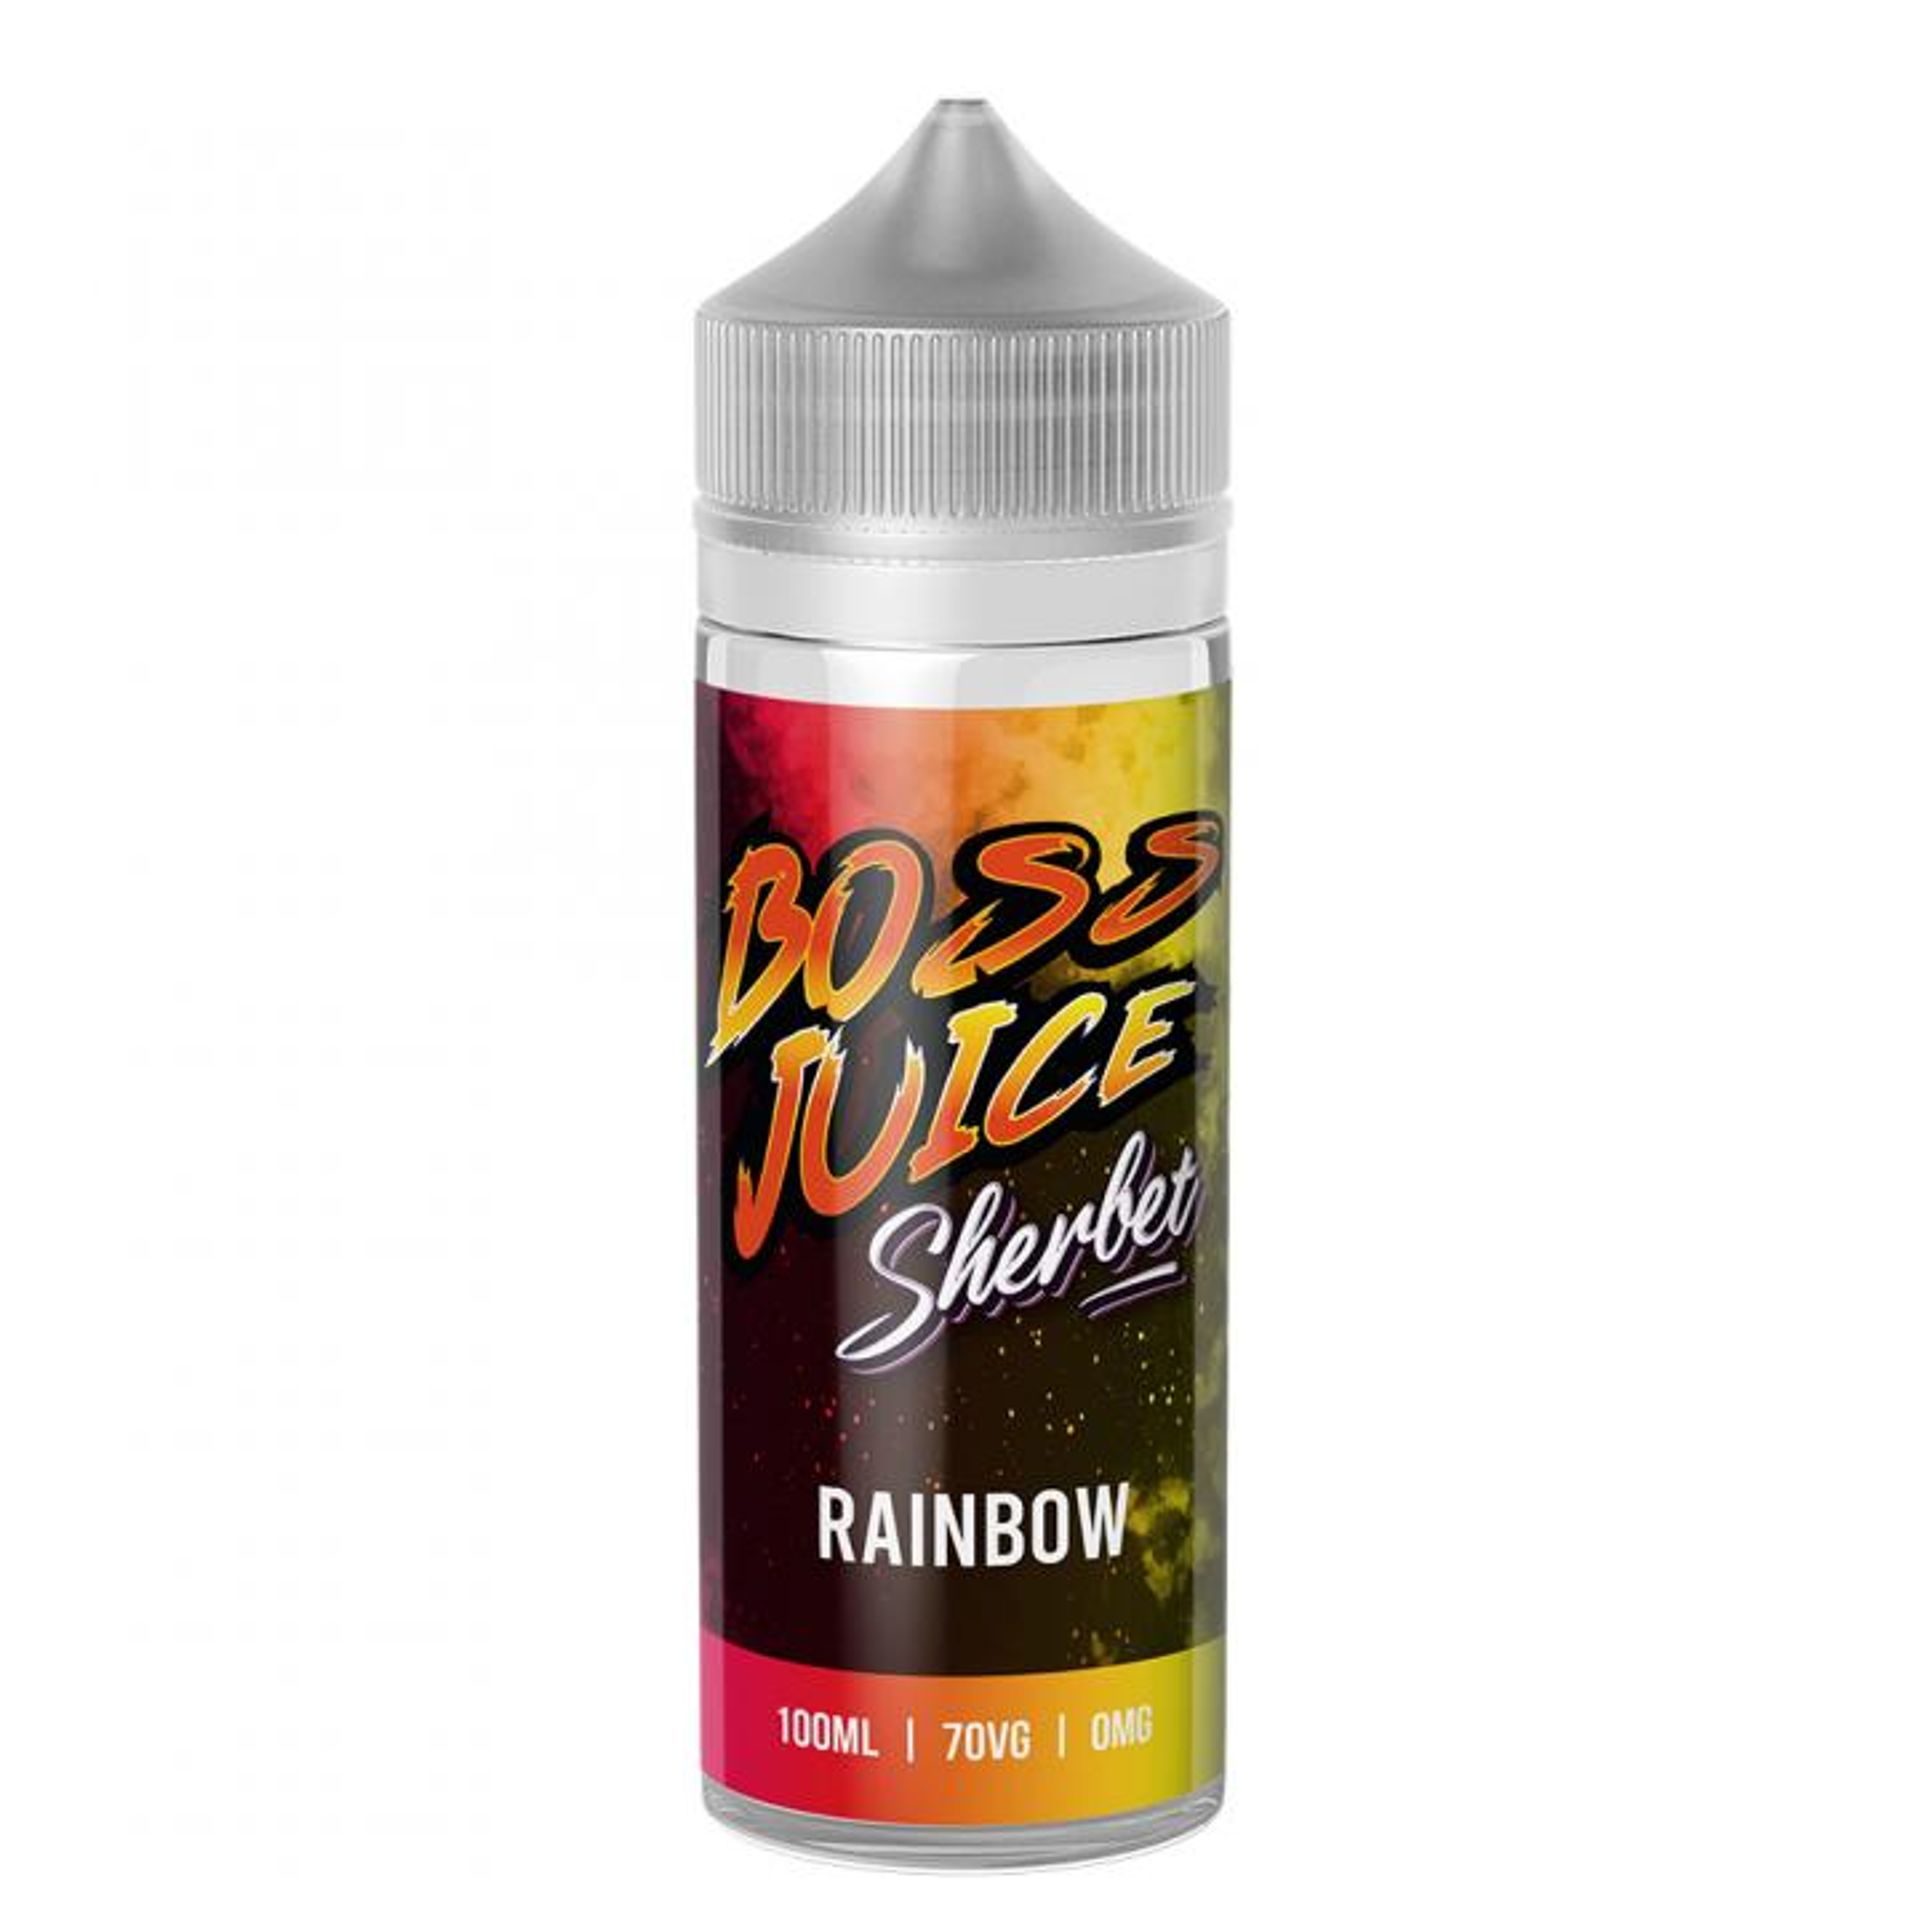 Image of Rainbow Sherbet by Boss Juice